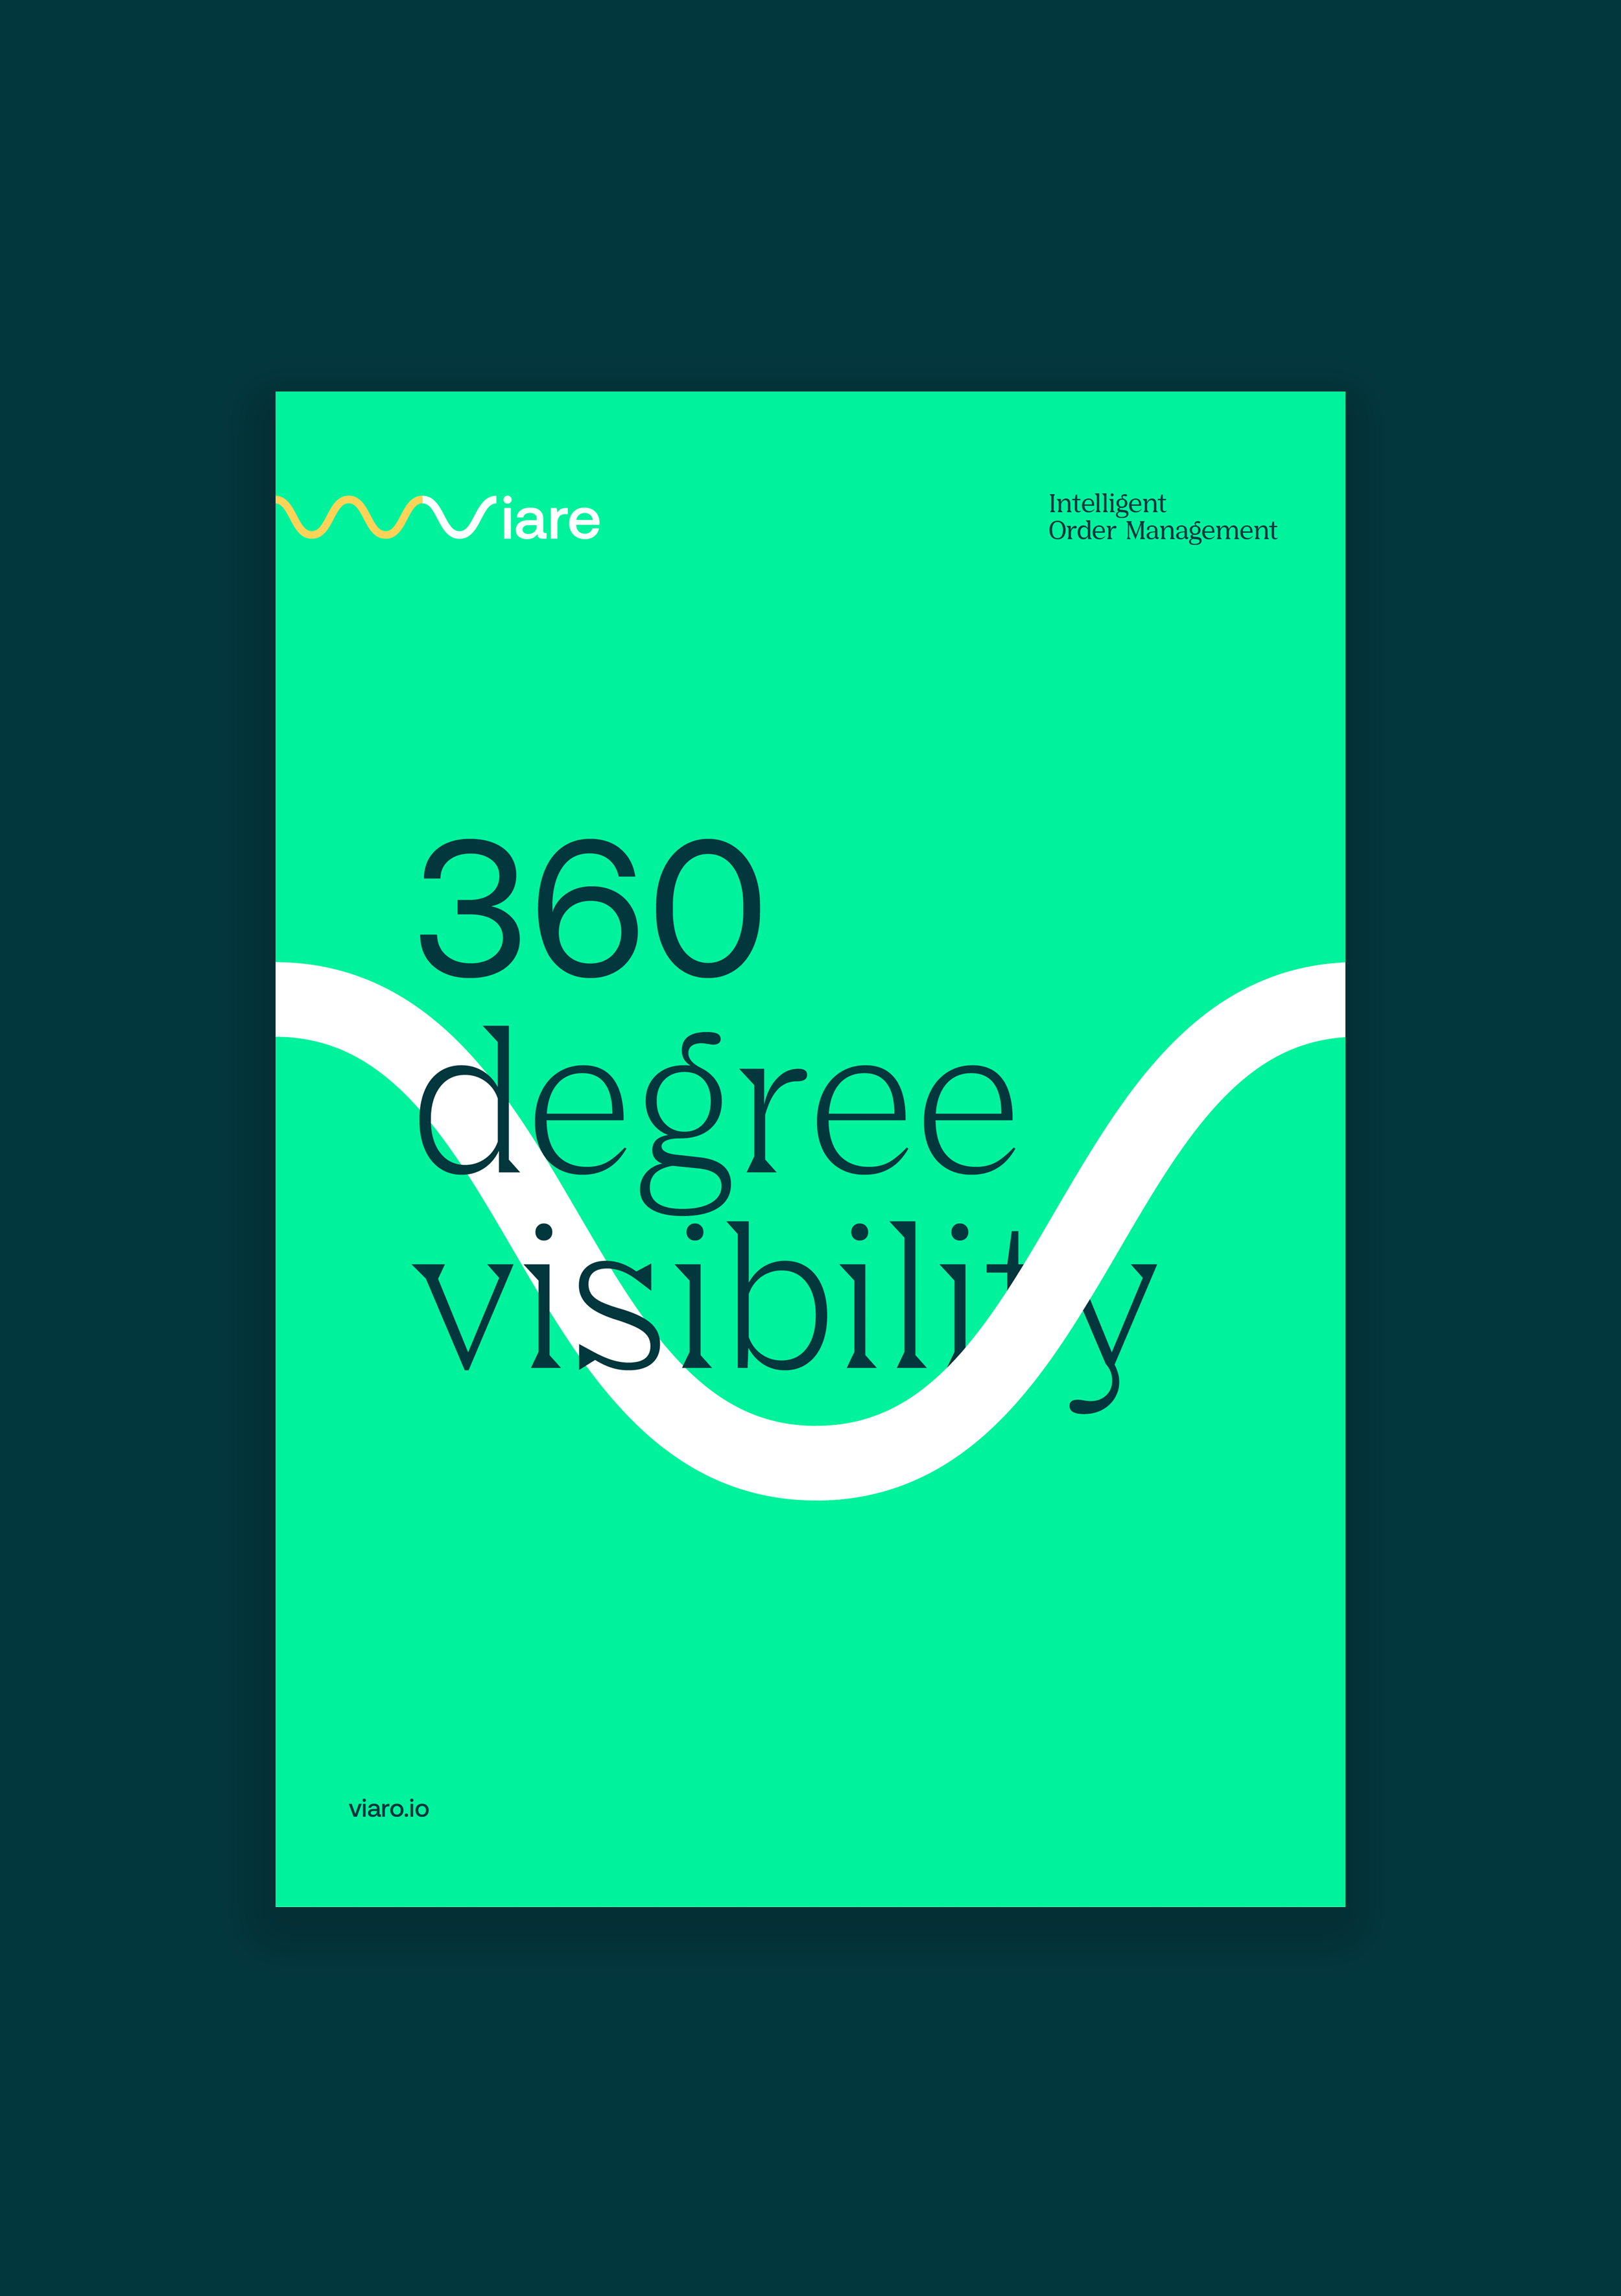 viare poster saying 360 degree visiability